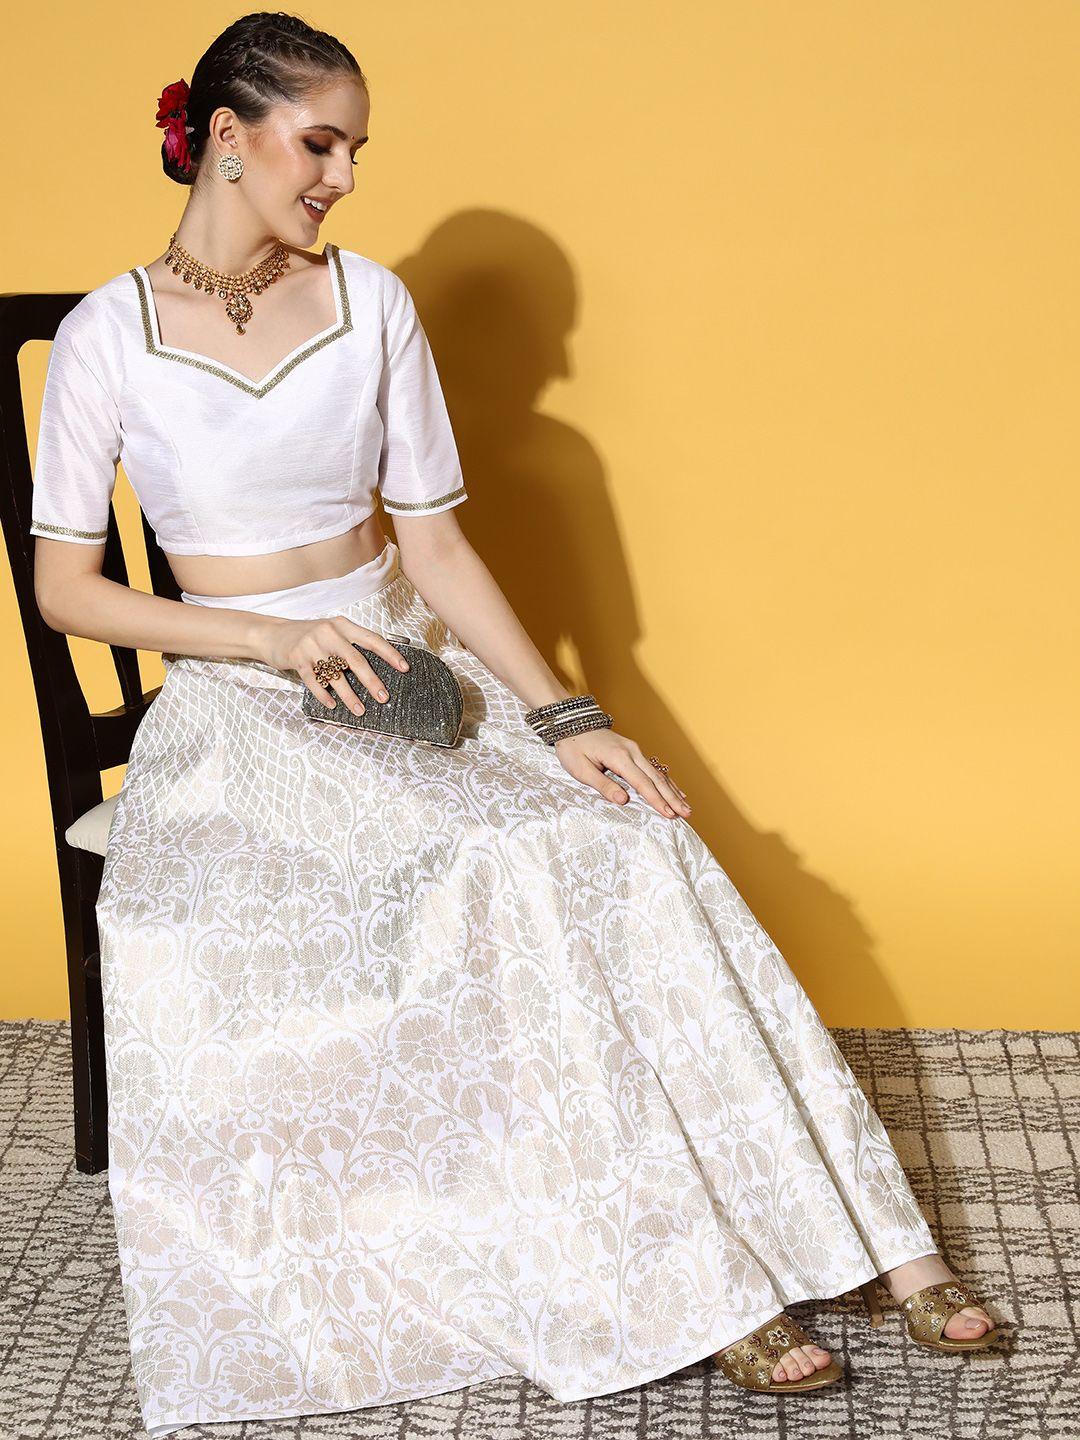 shae-by-sassafras-beautiful-white-floral-brocade-skirt